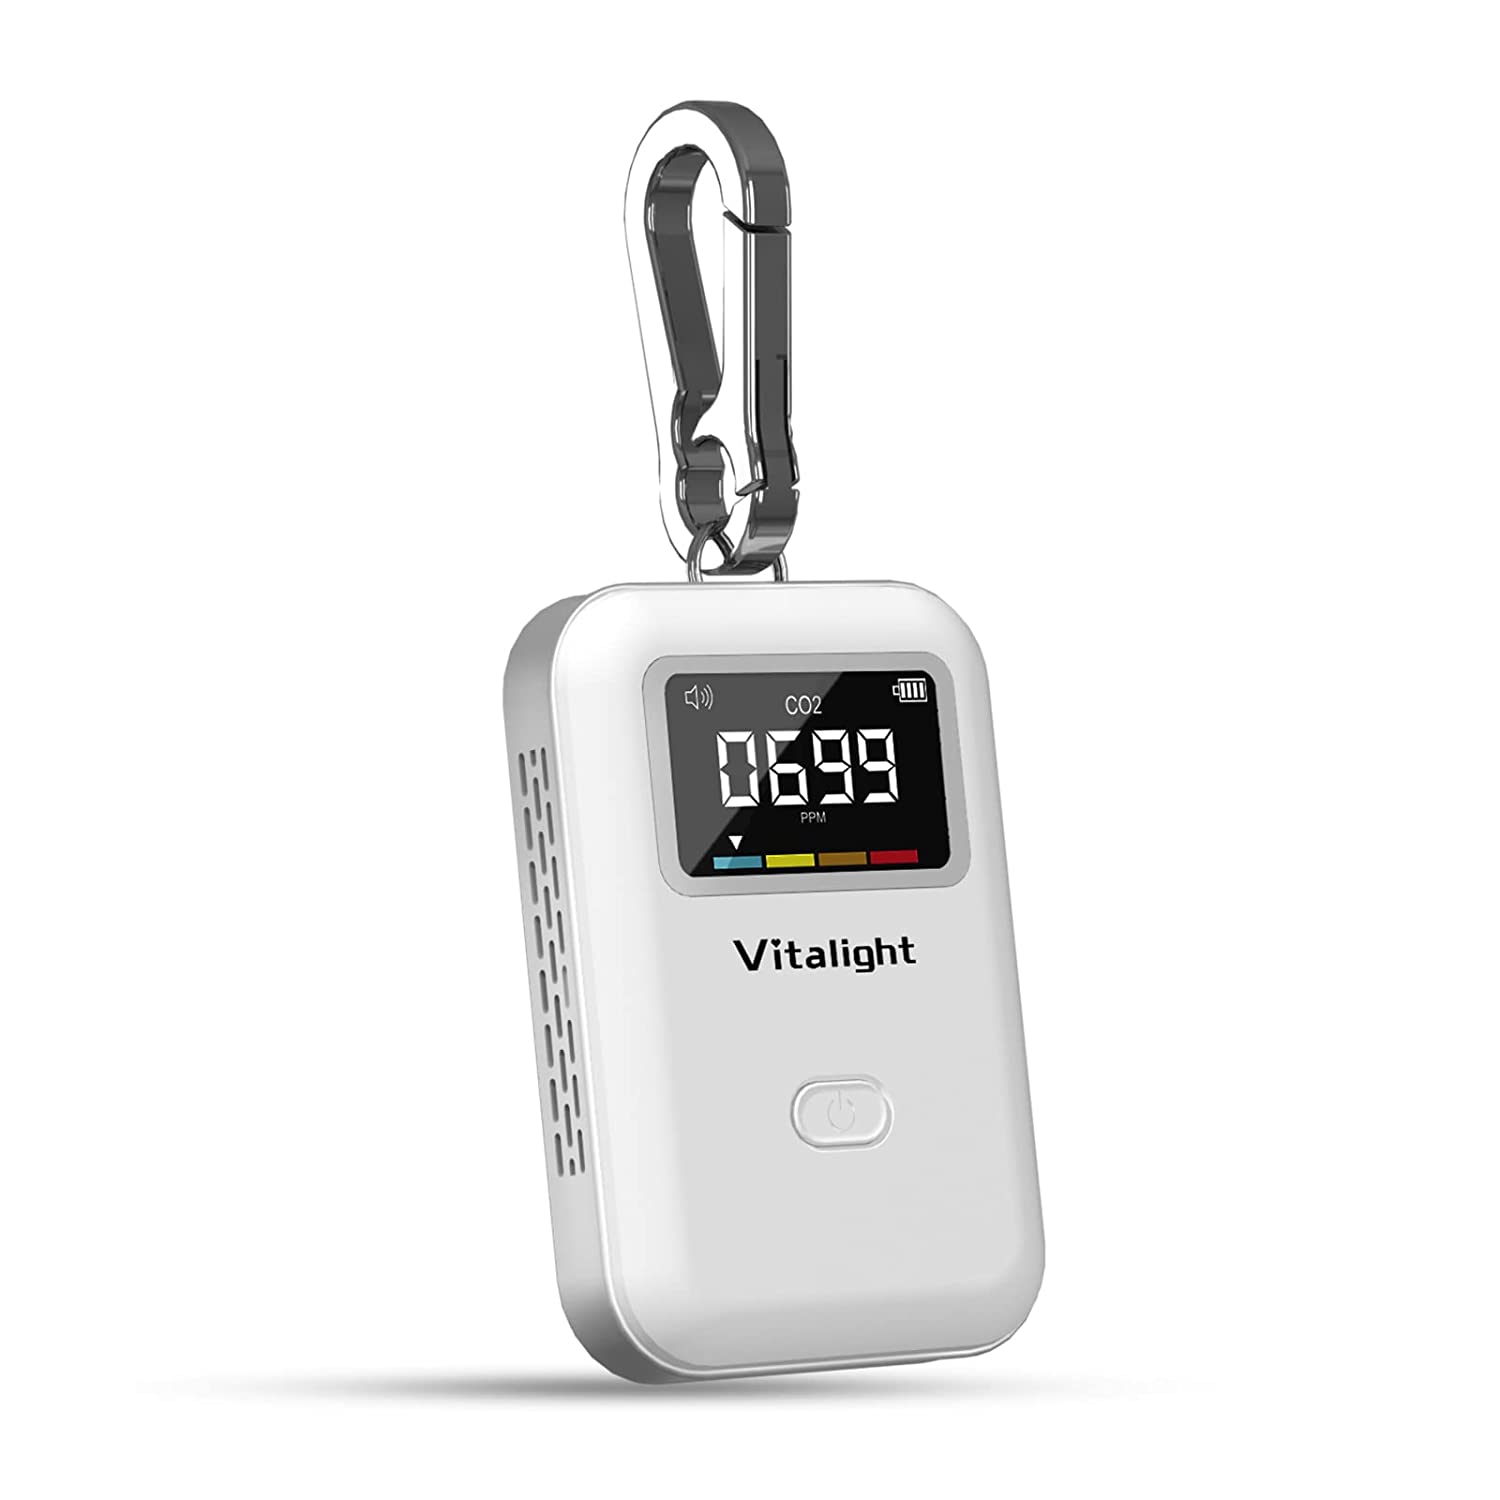 Vitalight Mini CO2 Monitor